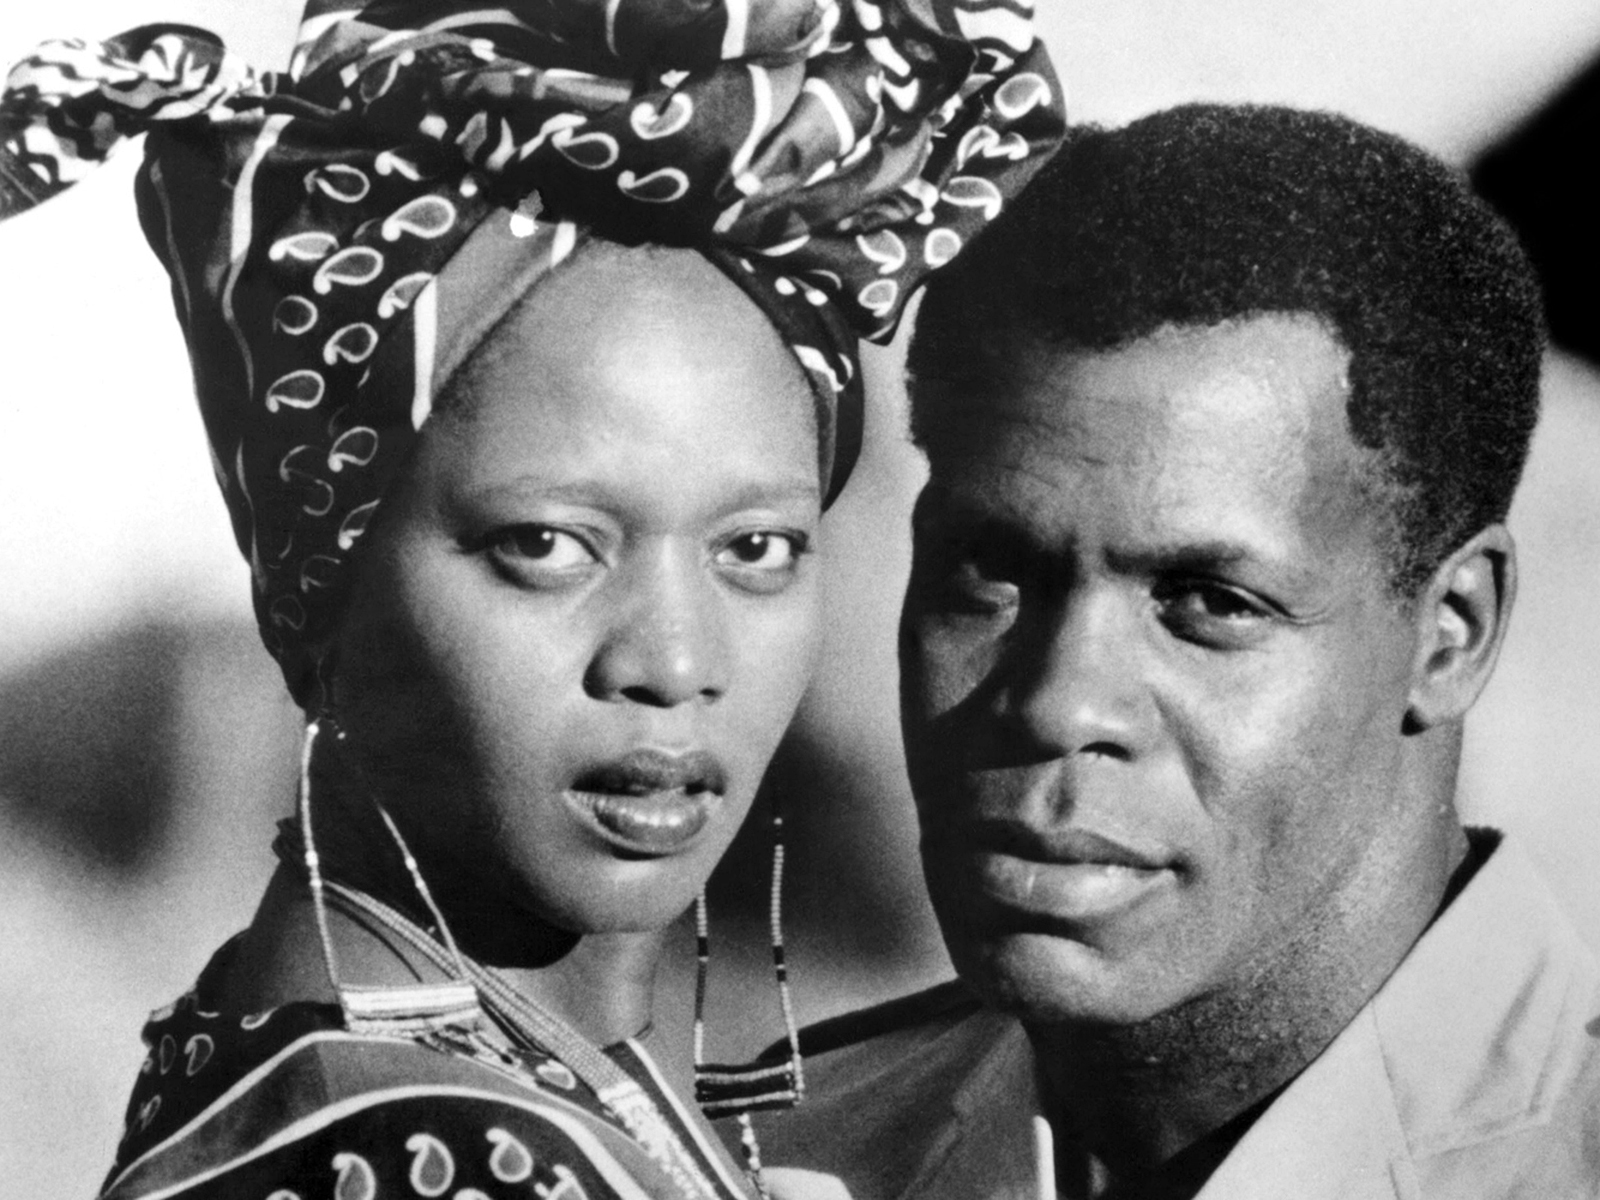 Alfre Woodard and Danny Glover in “Mandela” (1987)